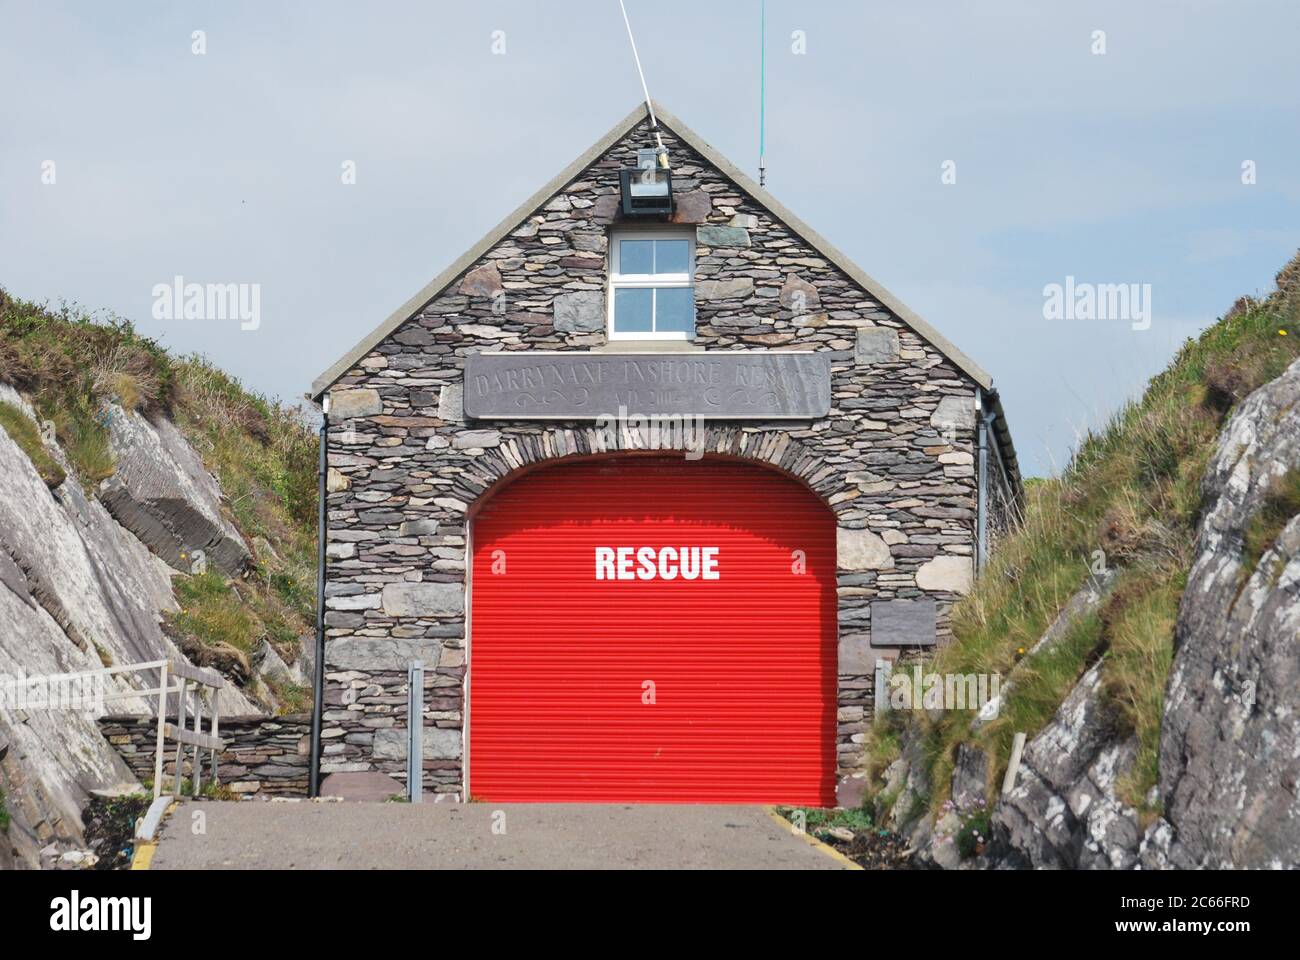 Derrynane Inshore Rescue Service, Derrynane, Co. Kerry, Irlanda Foto Stock